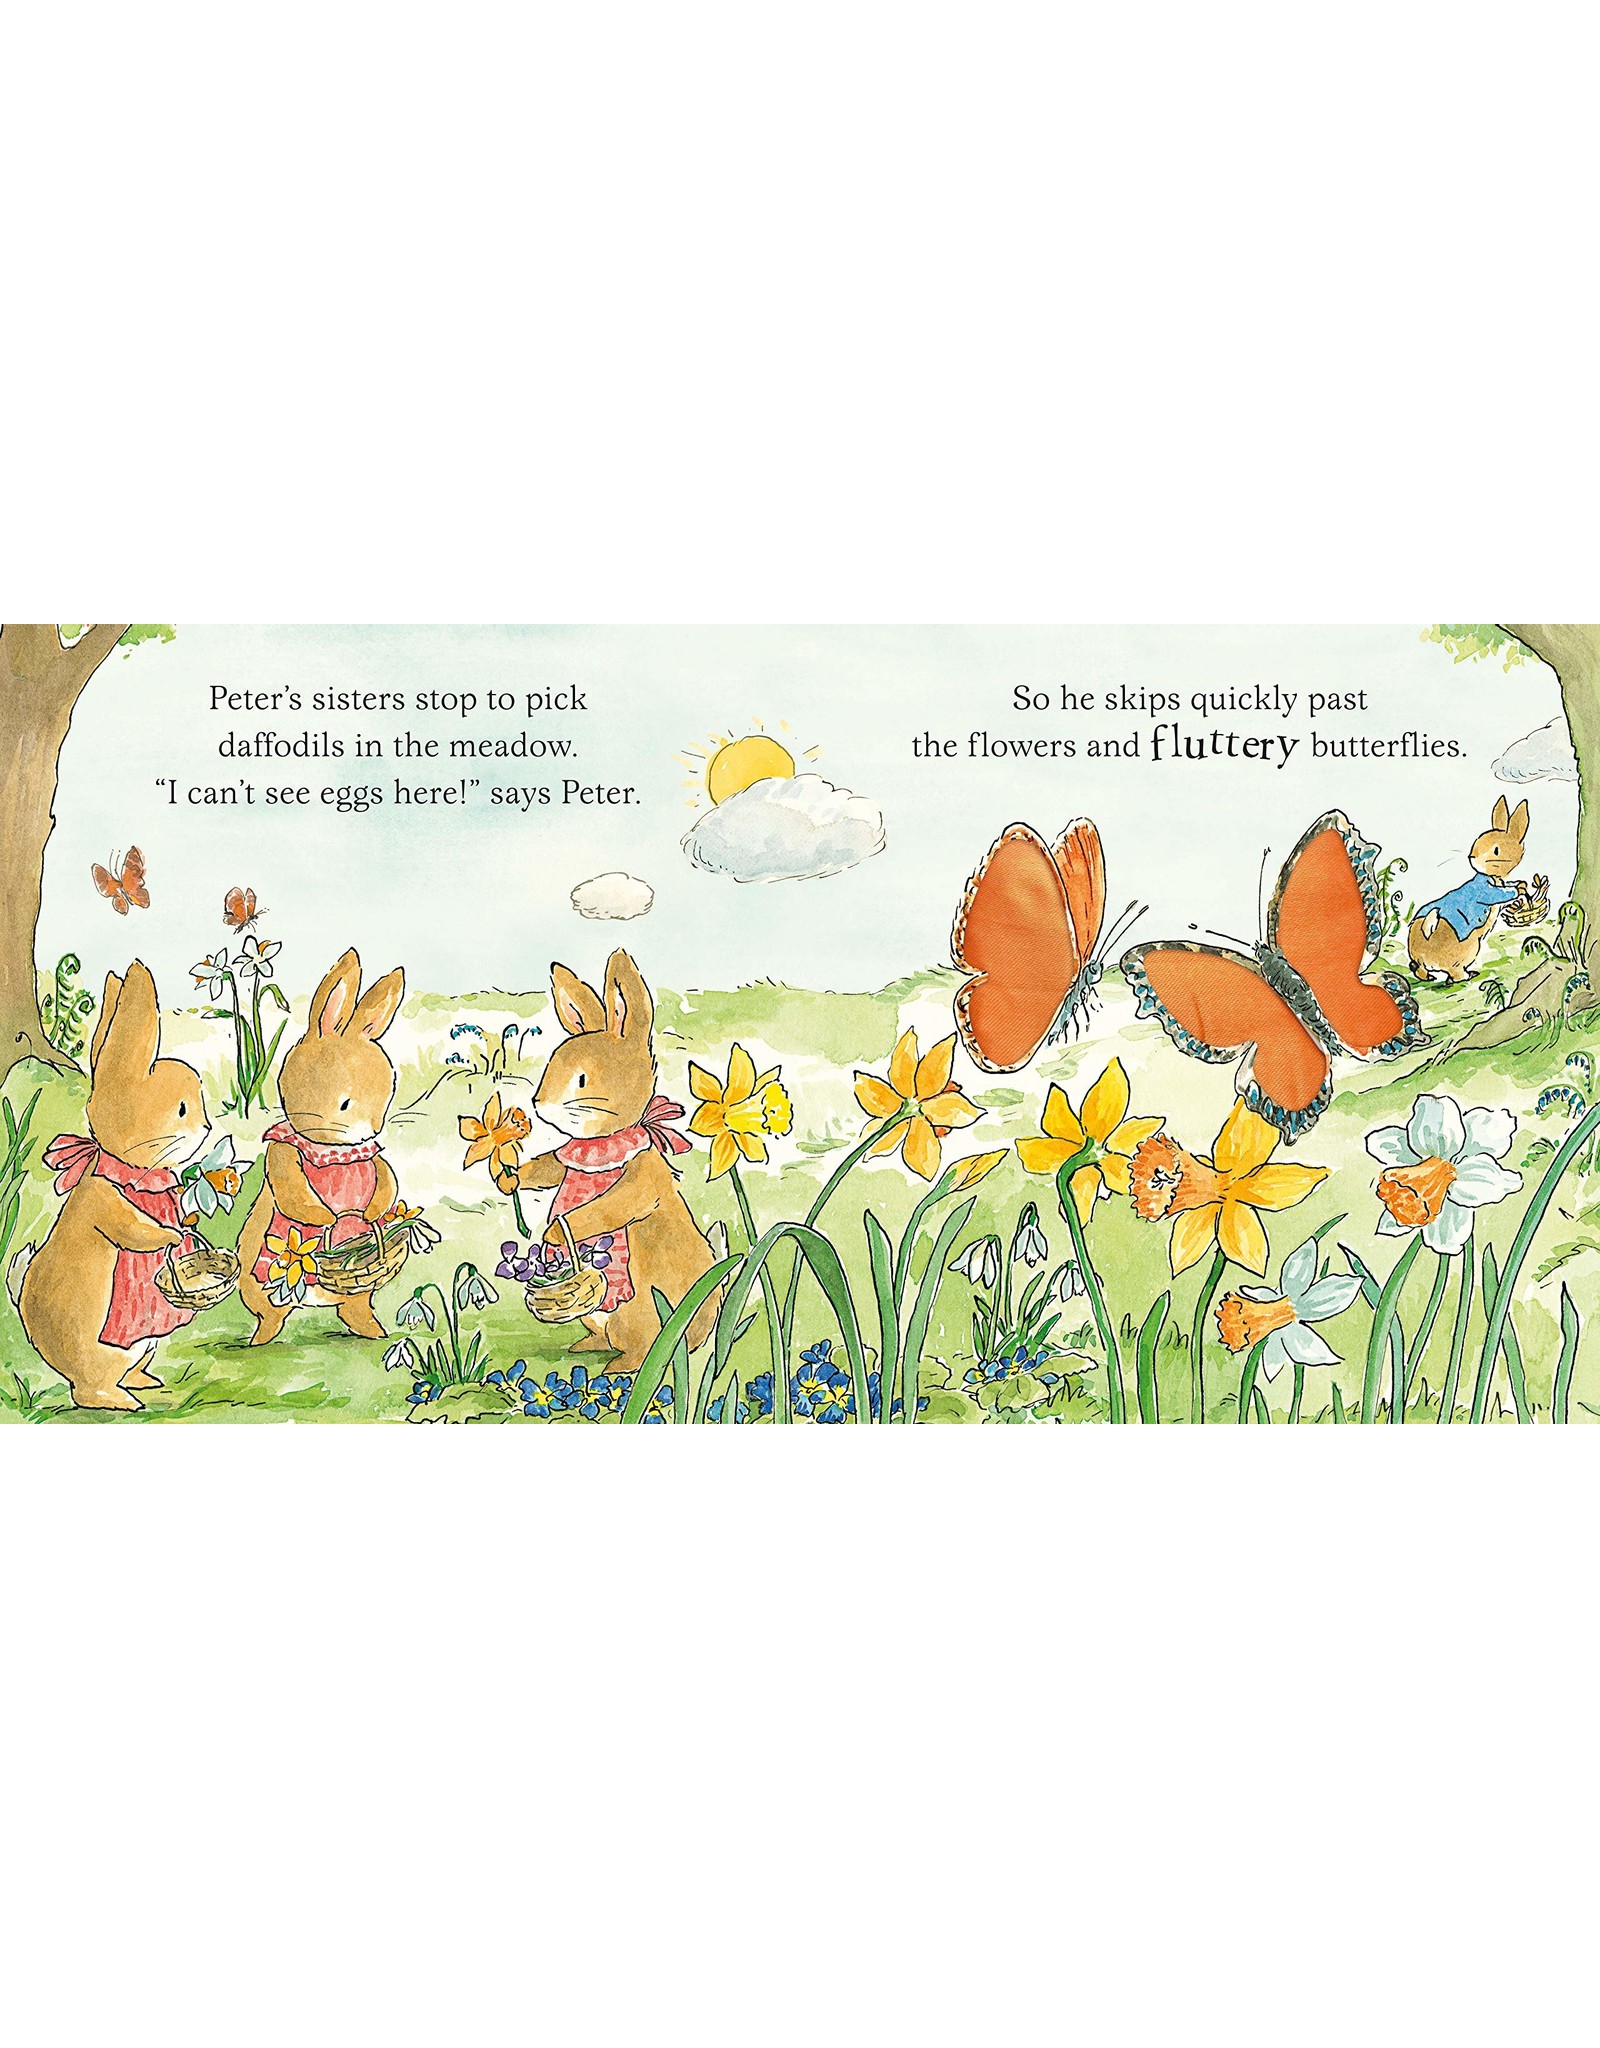 Penguin Random House Canada Peter Rabbit A Fluffy Easter Tale